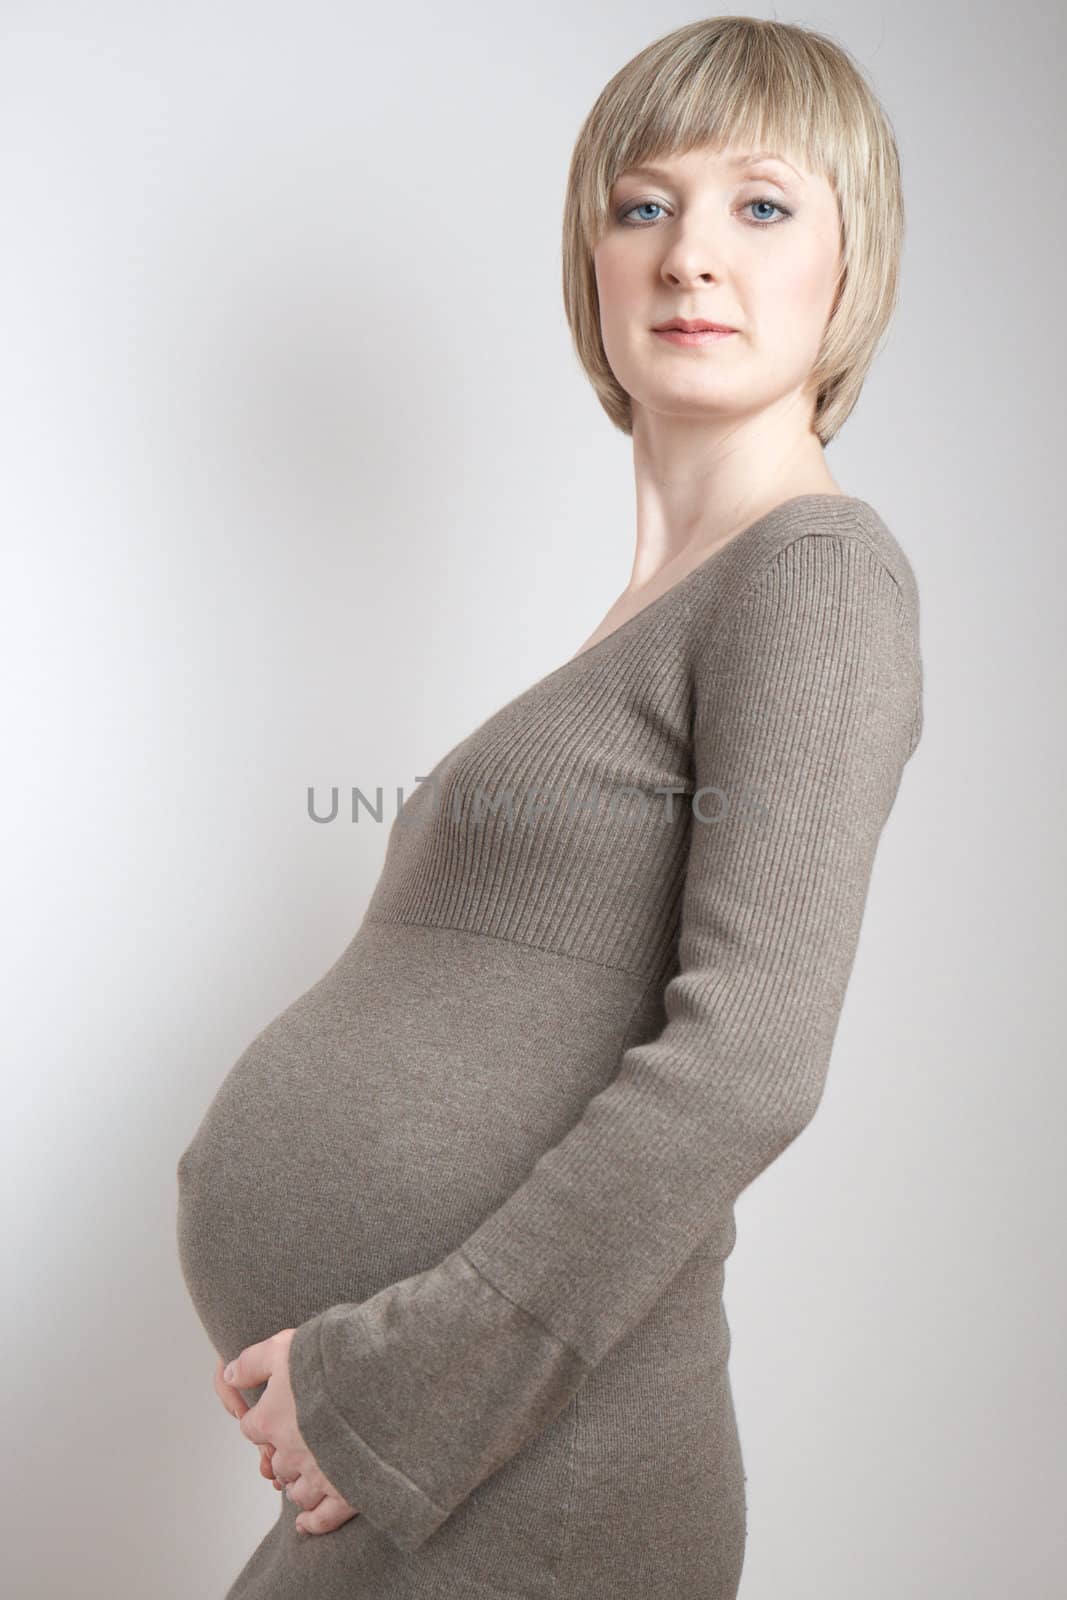 portrait of a pregnant woman by noblige